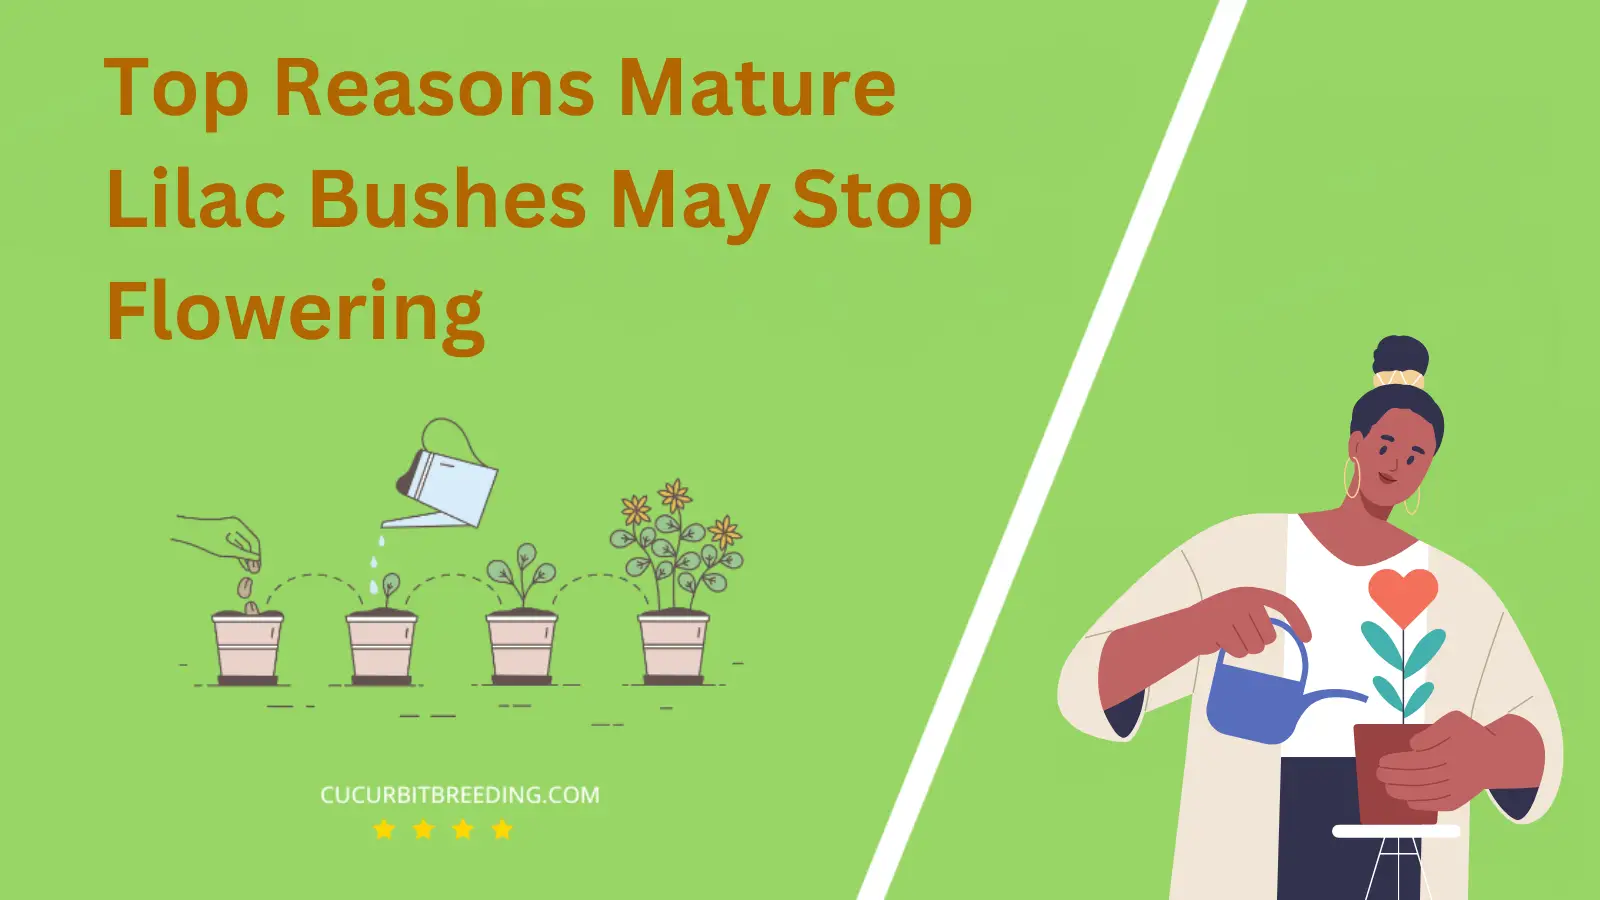 Top Reasons Mature Lilac Bushes May Stop Flowering